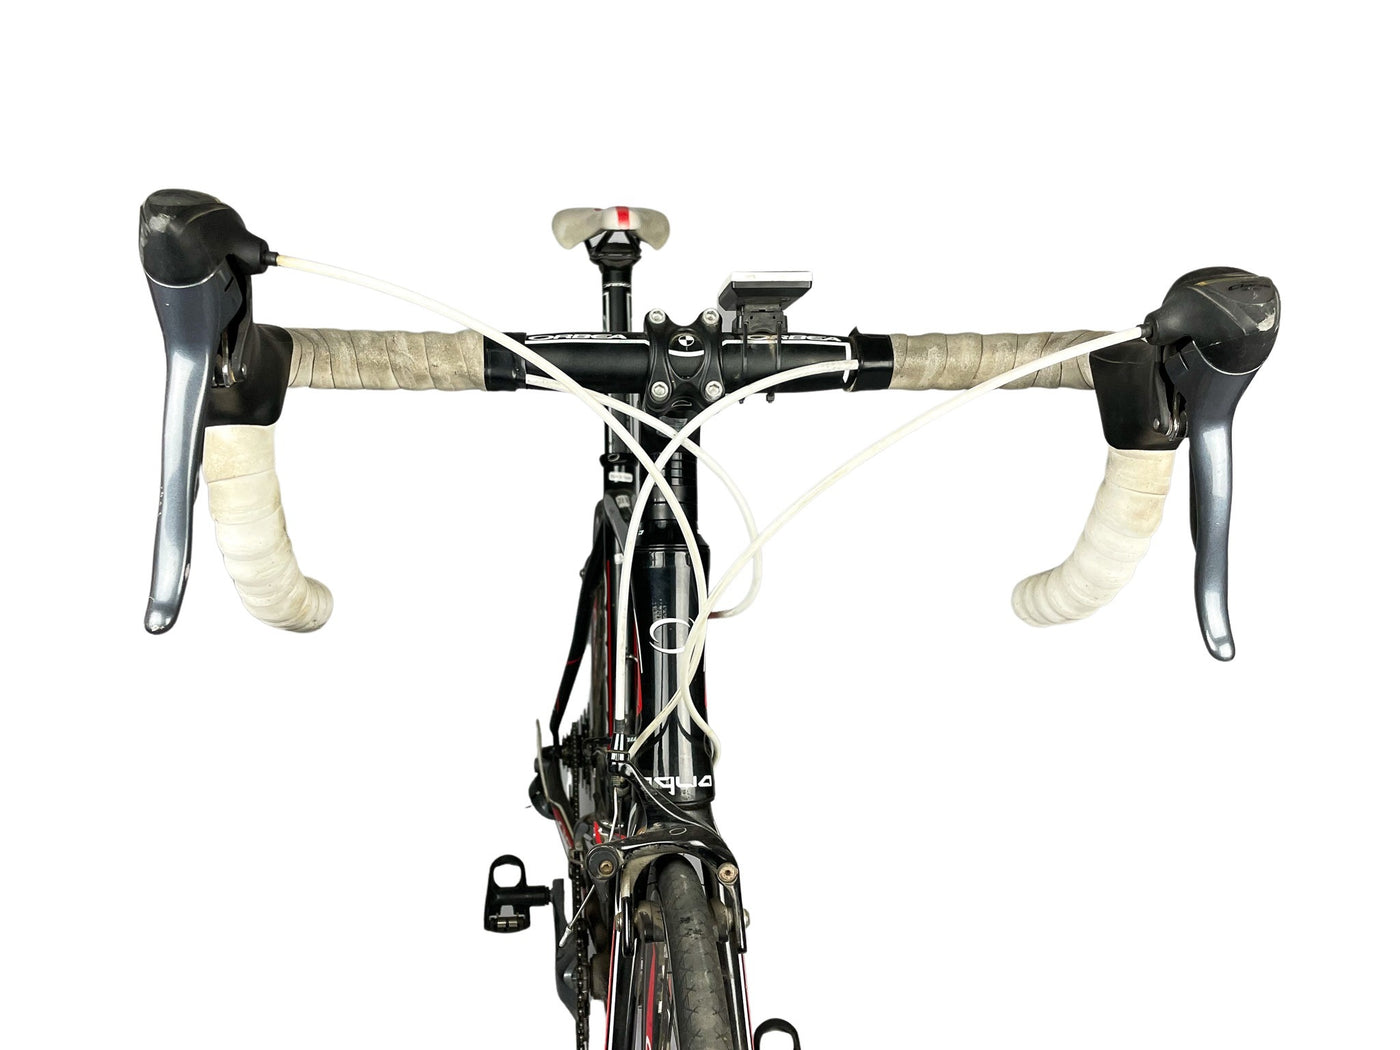 Orbea Acqua 2014 - 54 - Bicycles